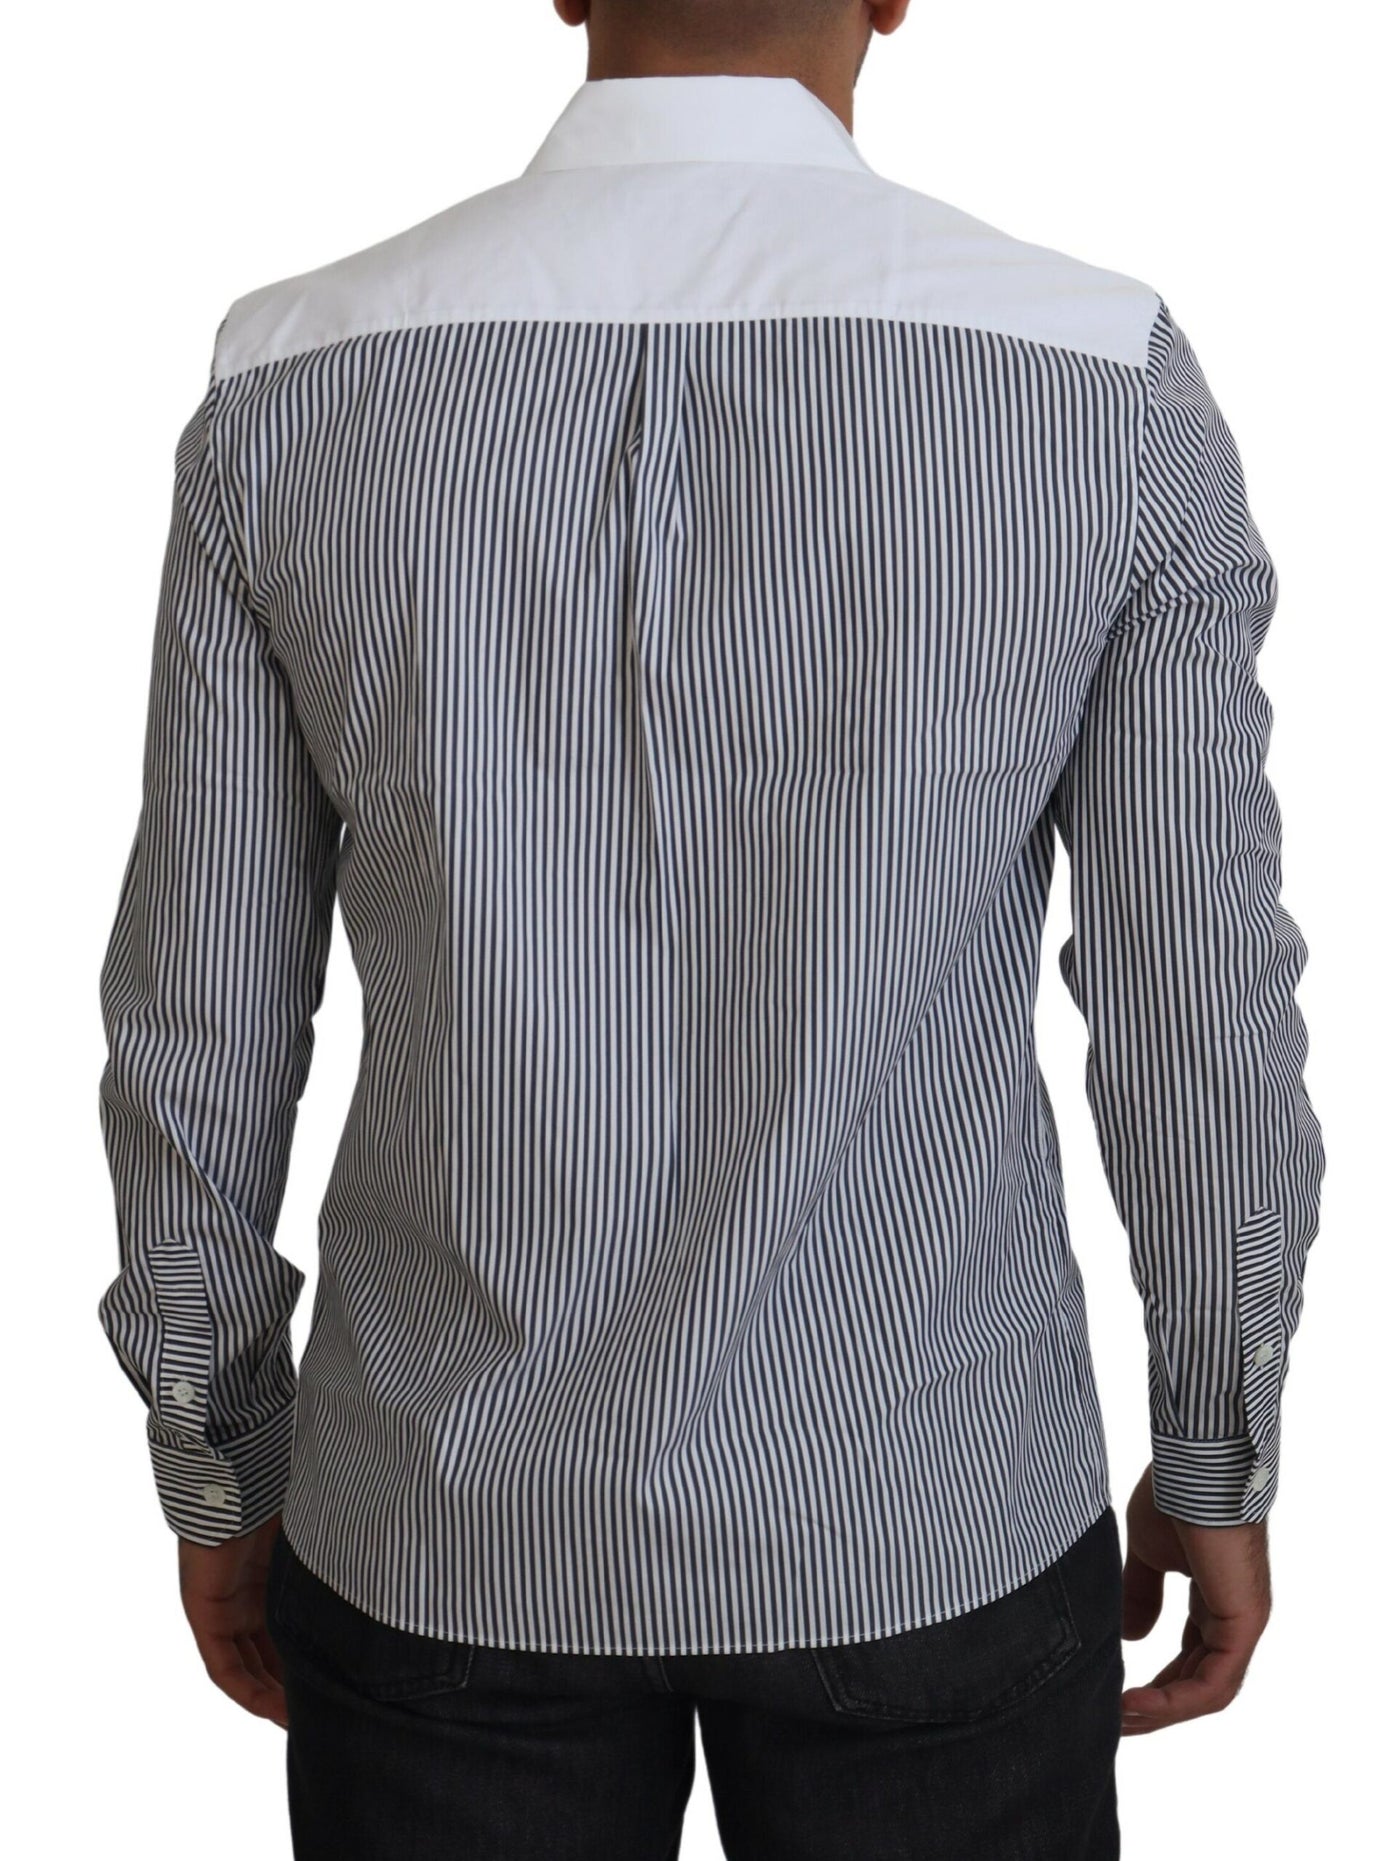 Dolce & Gabbana Gray White Striped Slim Fit Shirt